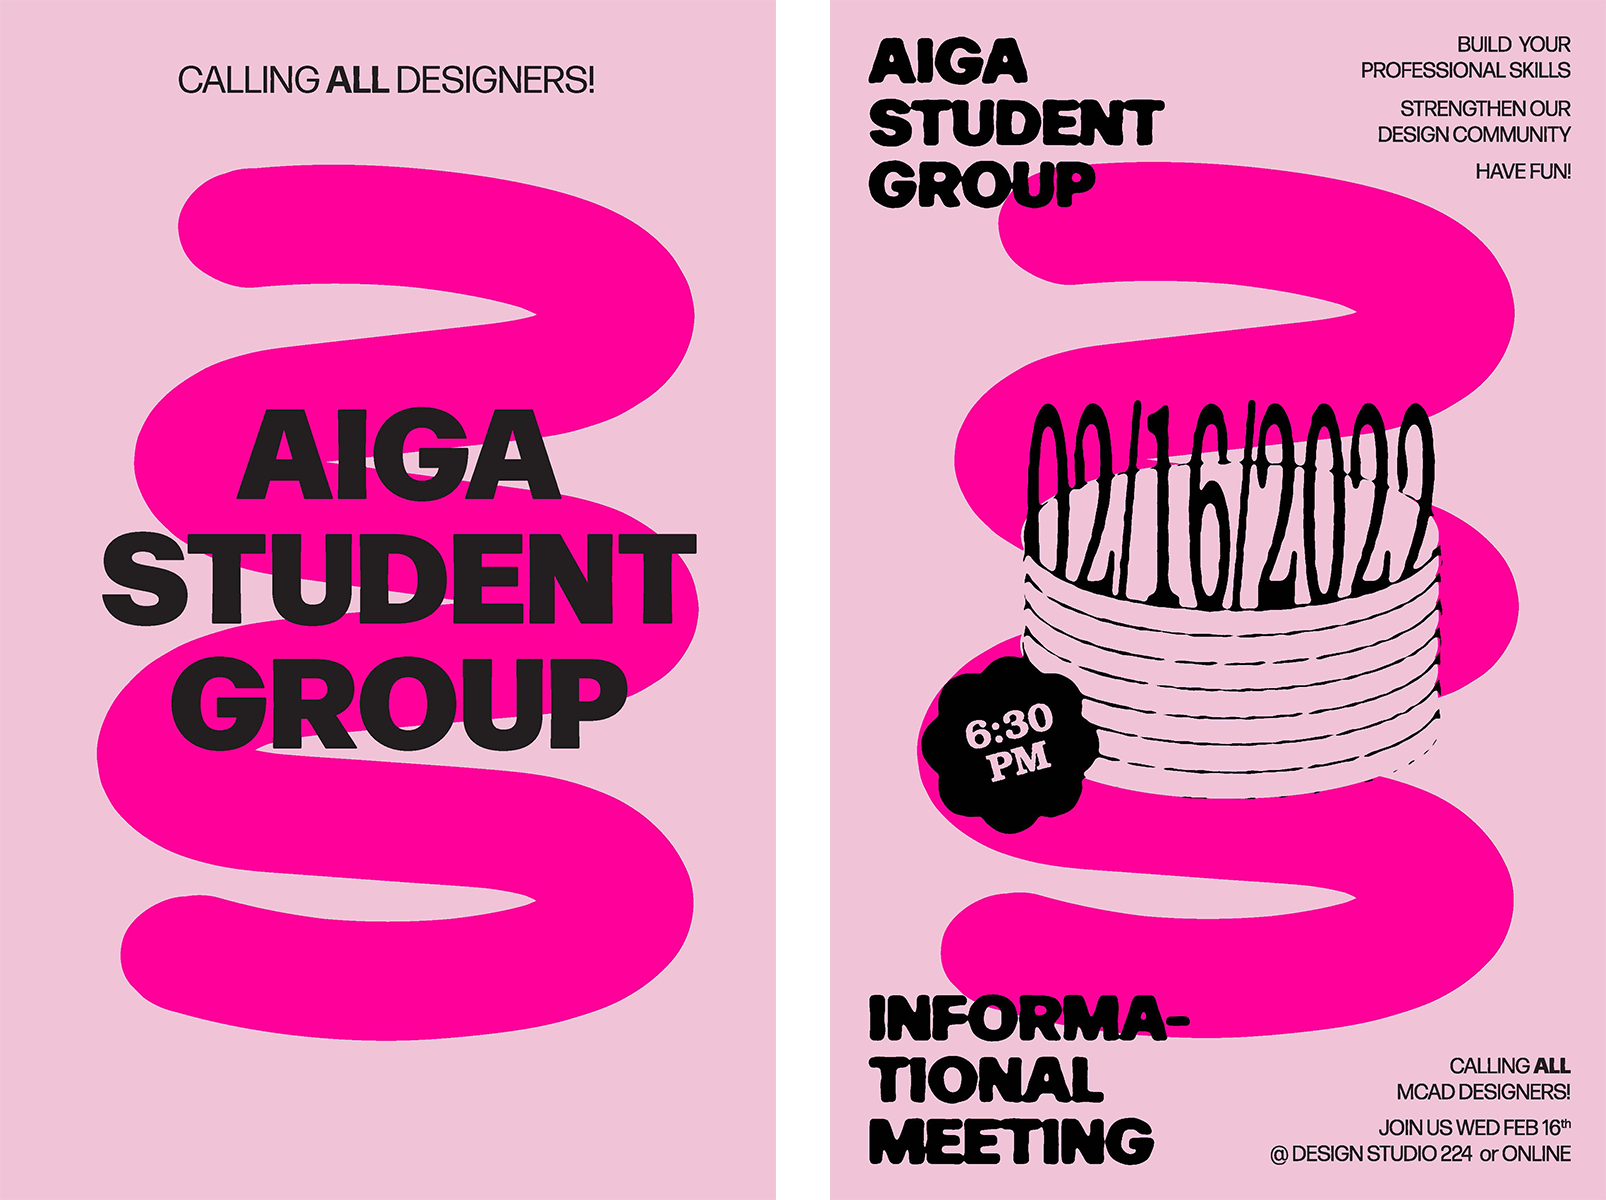 AIGA student group